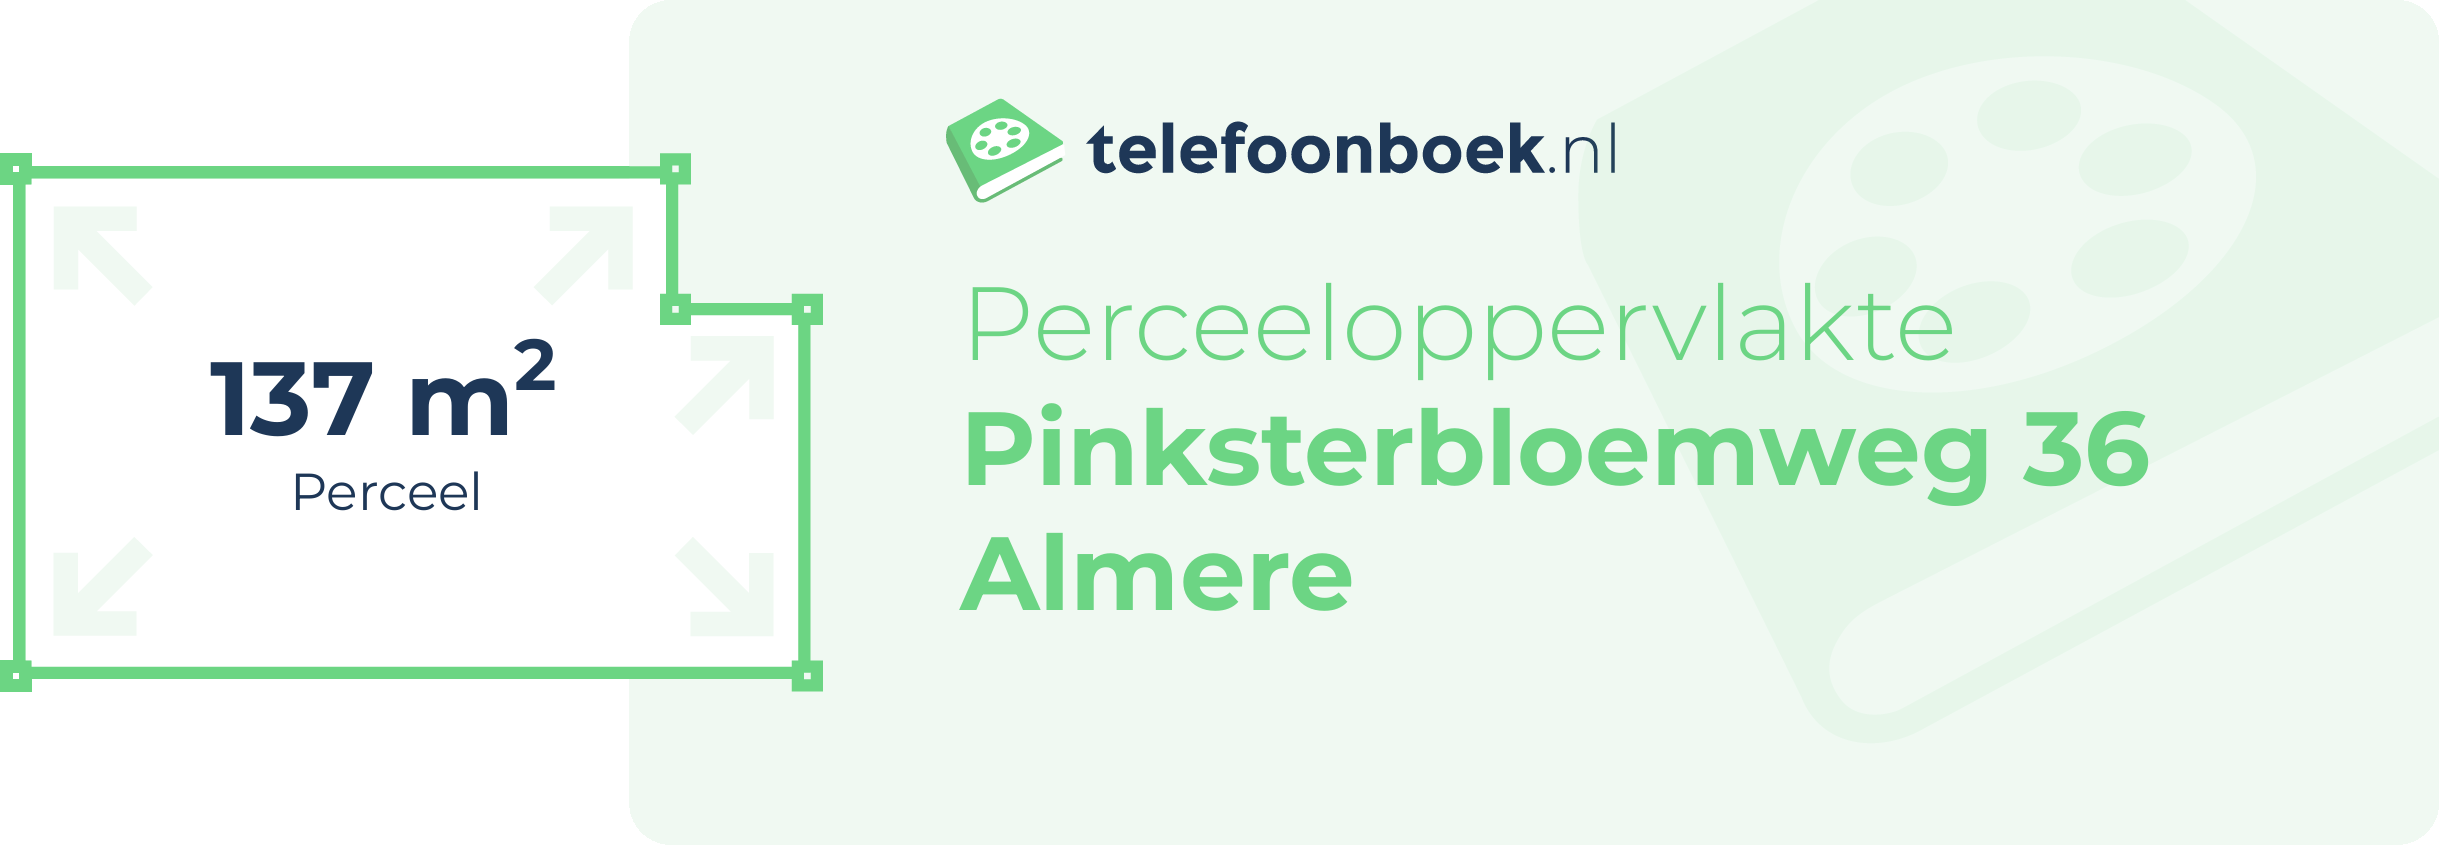 Perceeloppervlakte Pinksterbloemweg 36 Almere